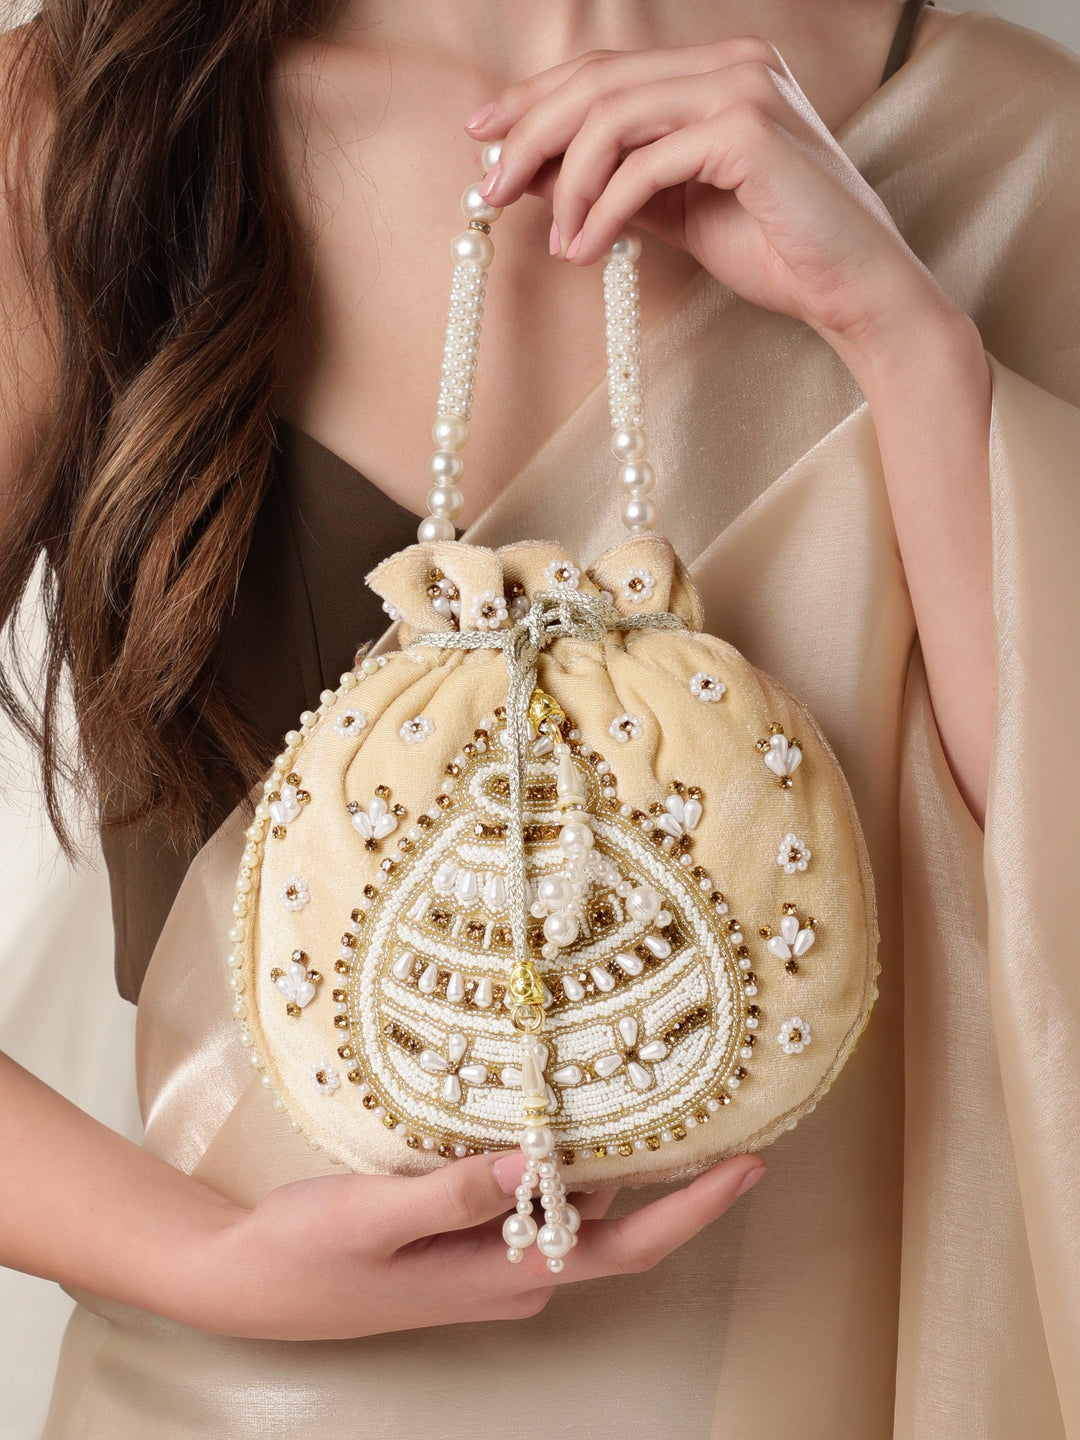 Black Color Wedding Potli Bag | Handmade Embellished Stone and Pearl | Desi Indian Pakistani Wedding Purse | Evening Party Purse